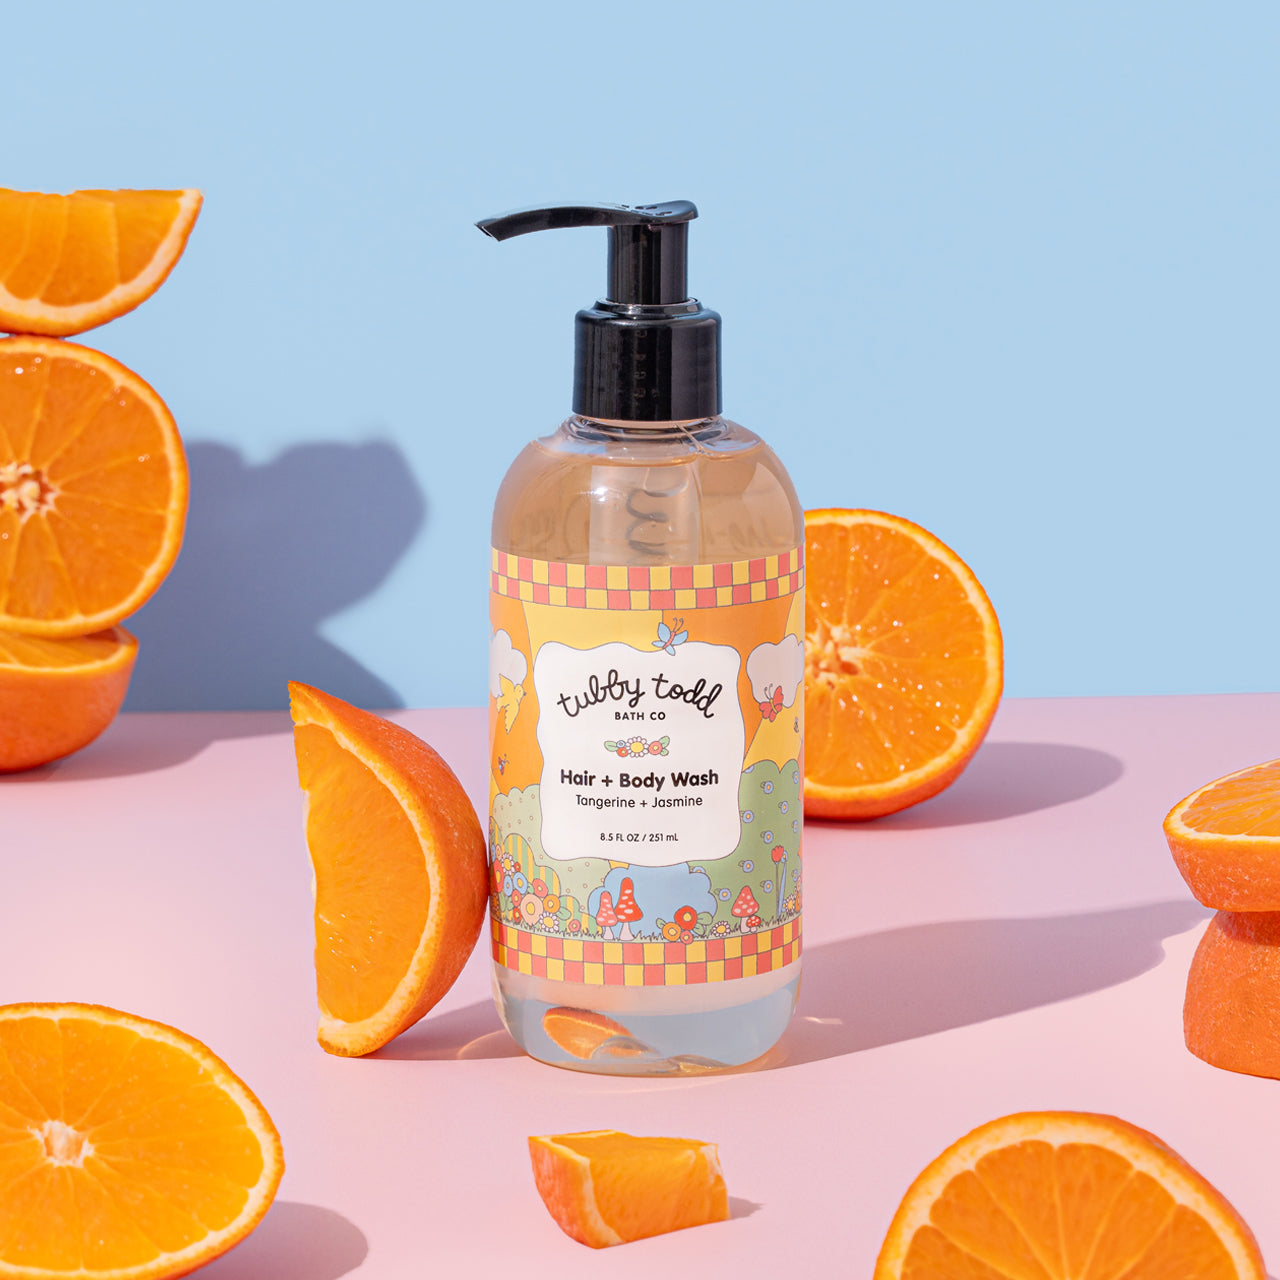 tangerine + jasmine hair + body wash surrounded by orange slices